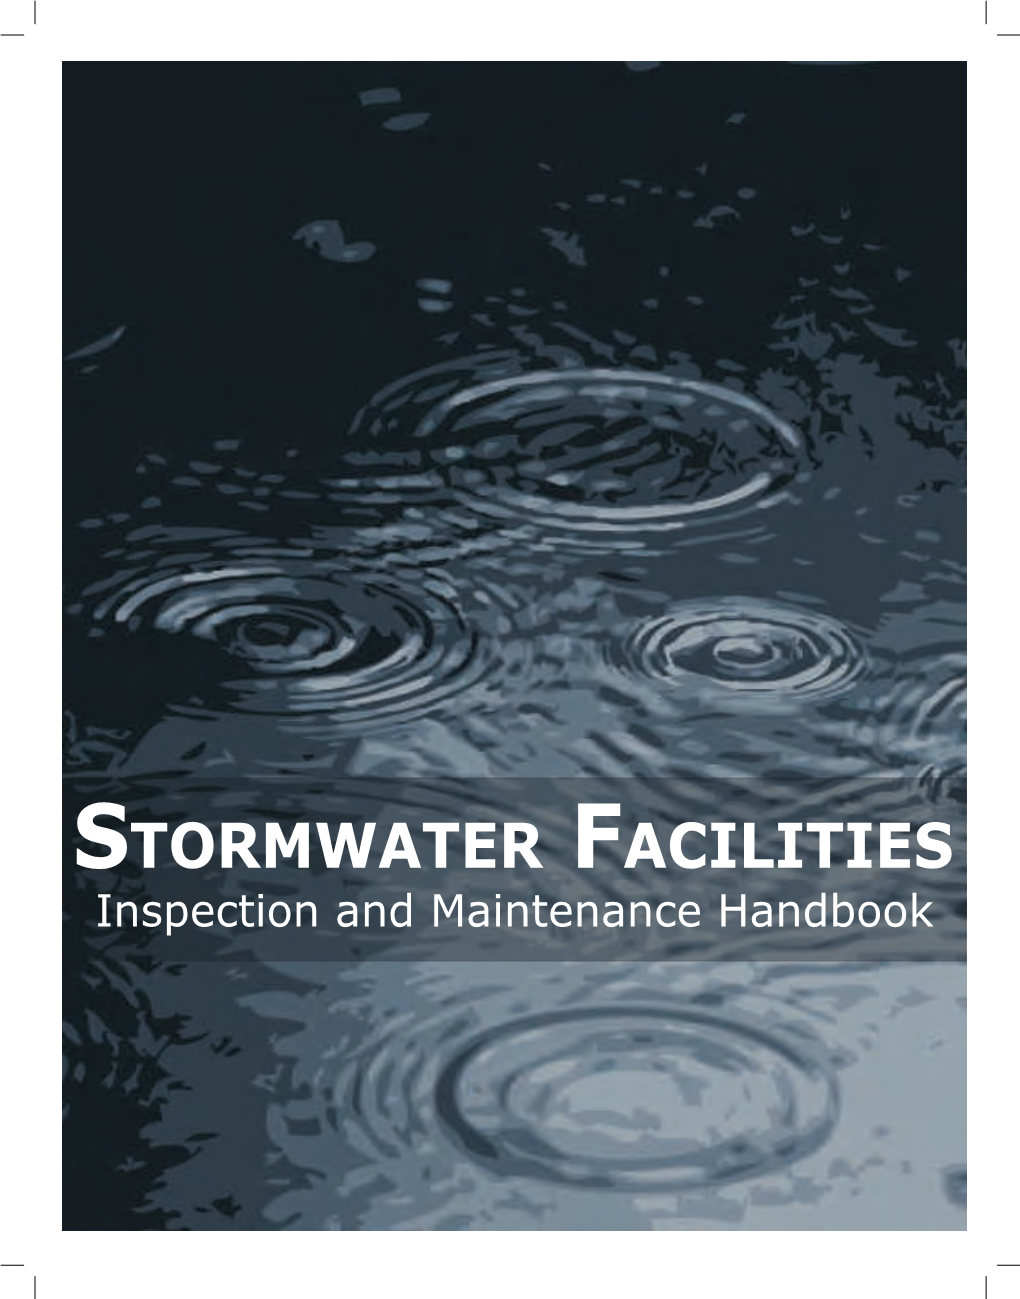 Stormwater Facilities Inspection and Maintenance Handbook